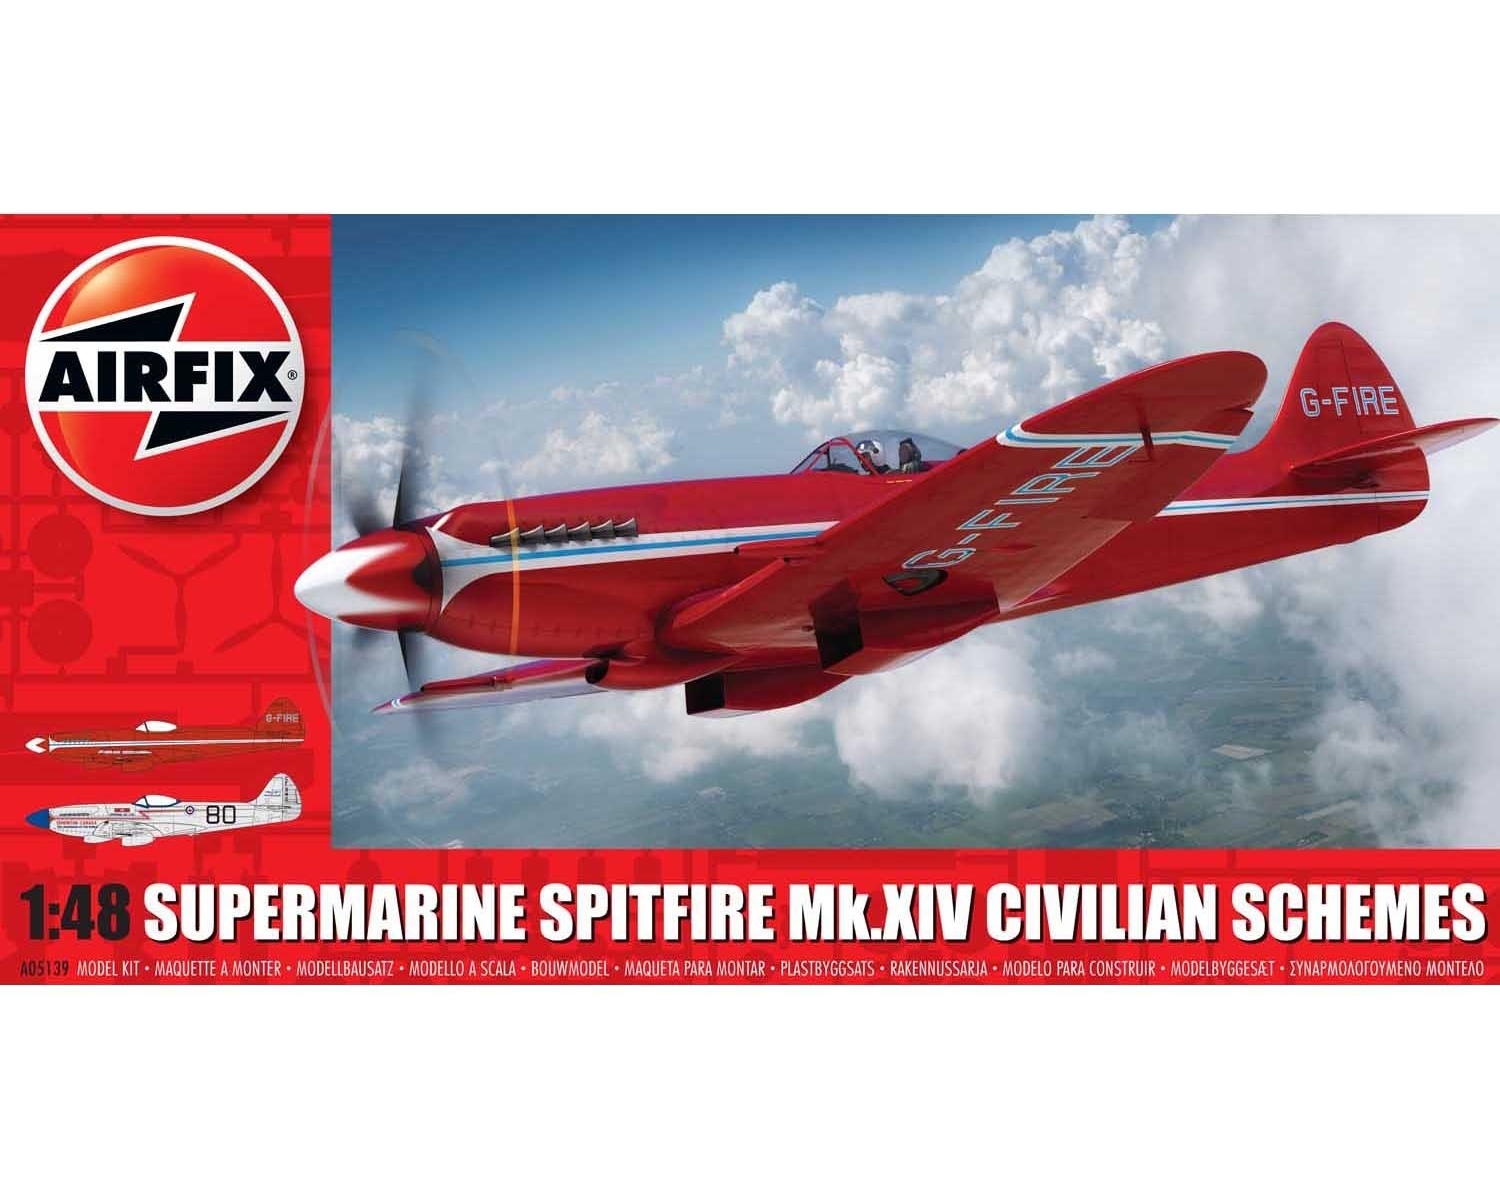 Airfix 05139 - SUPERMARINE SPITFIRE MKXIV RACE SCHEMES